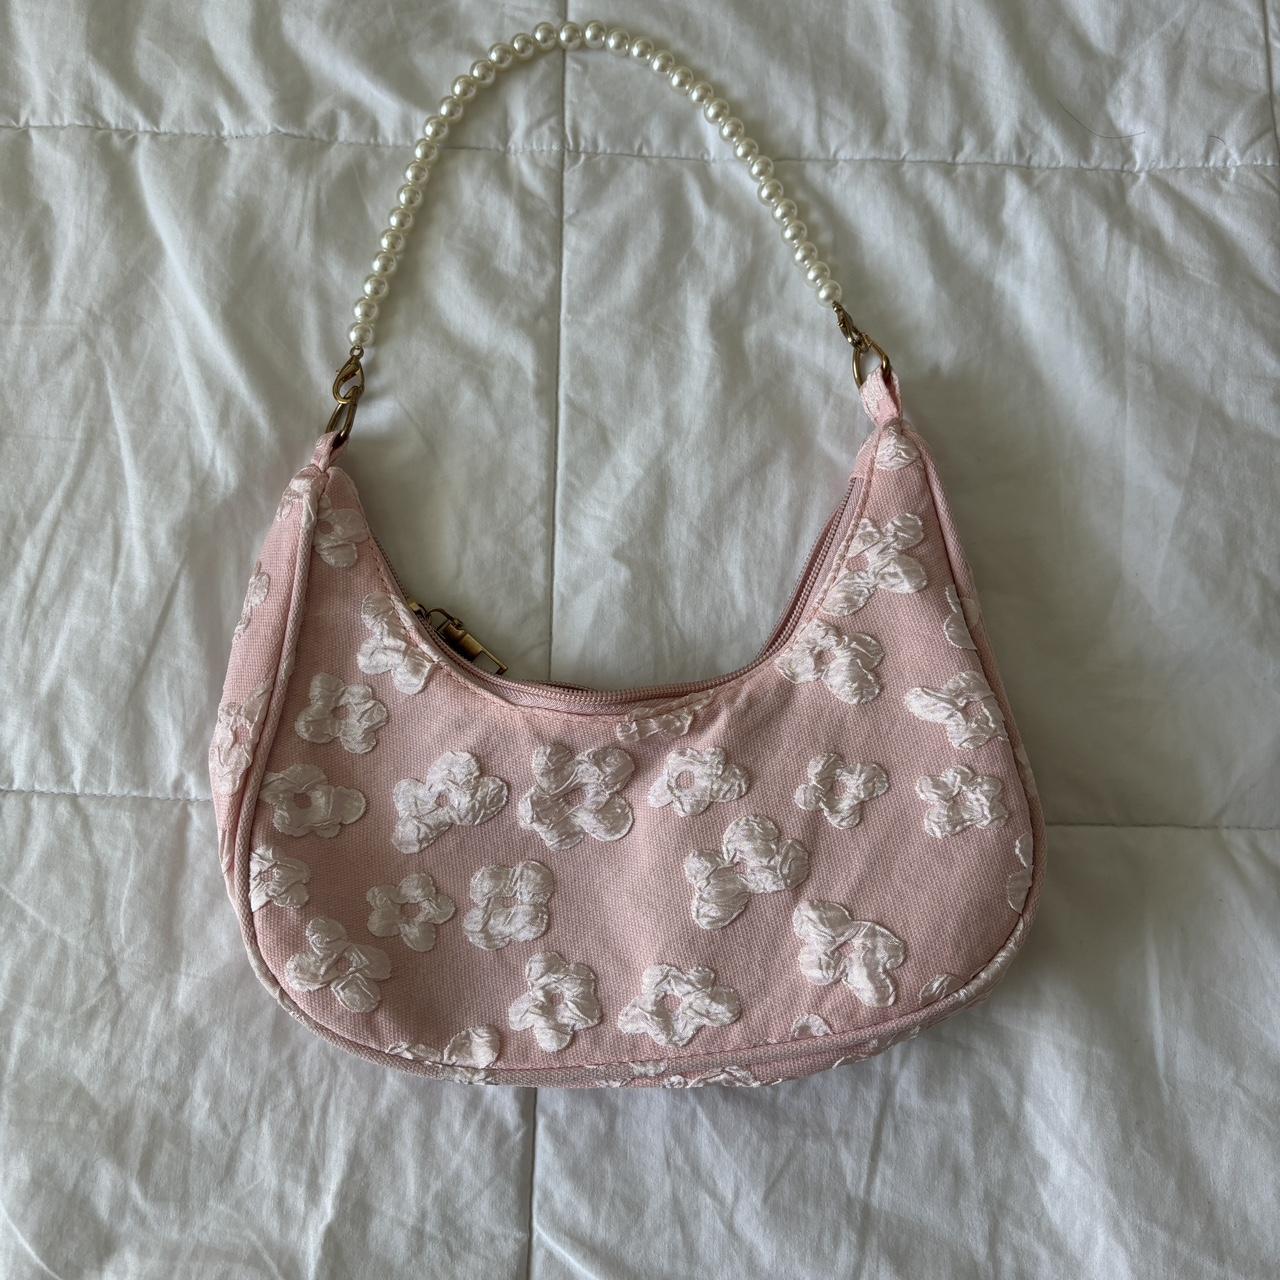 Adorable pink flowery shoulder bag Has the cutest... - Depop